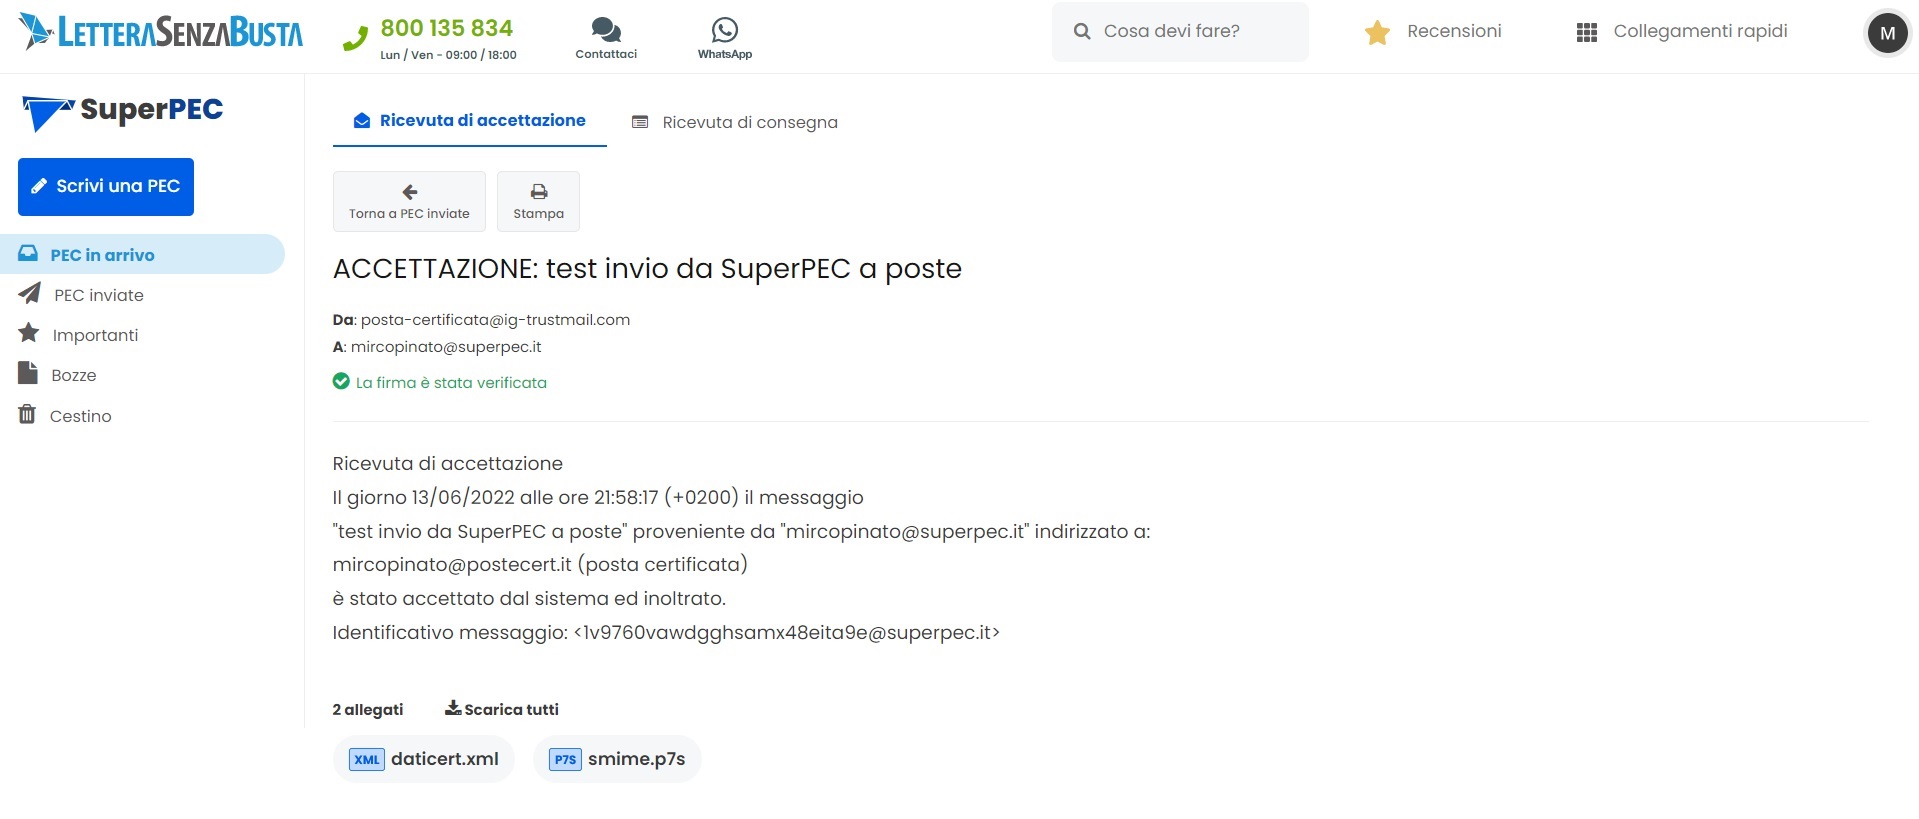 Webmail SuperPEC: ricevute di accettazione e di consegna